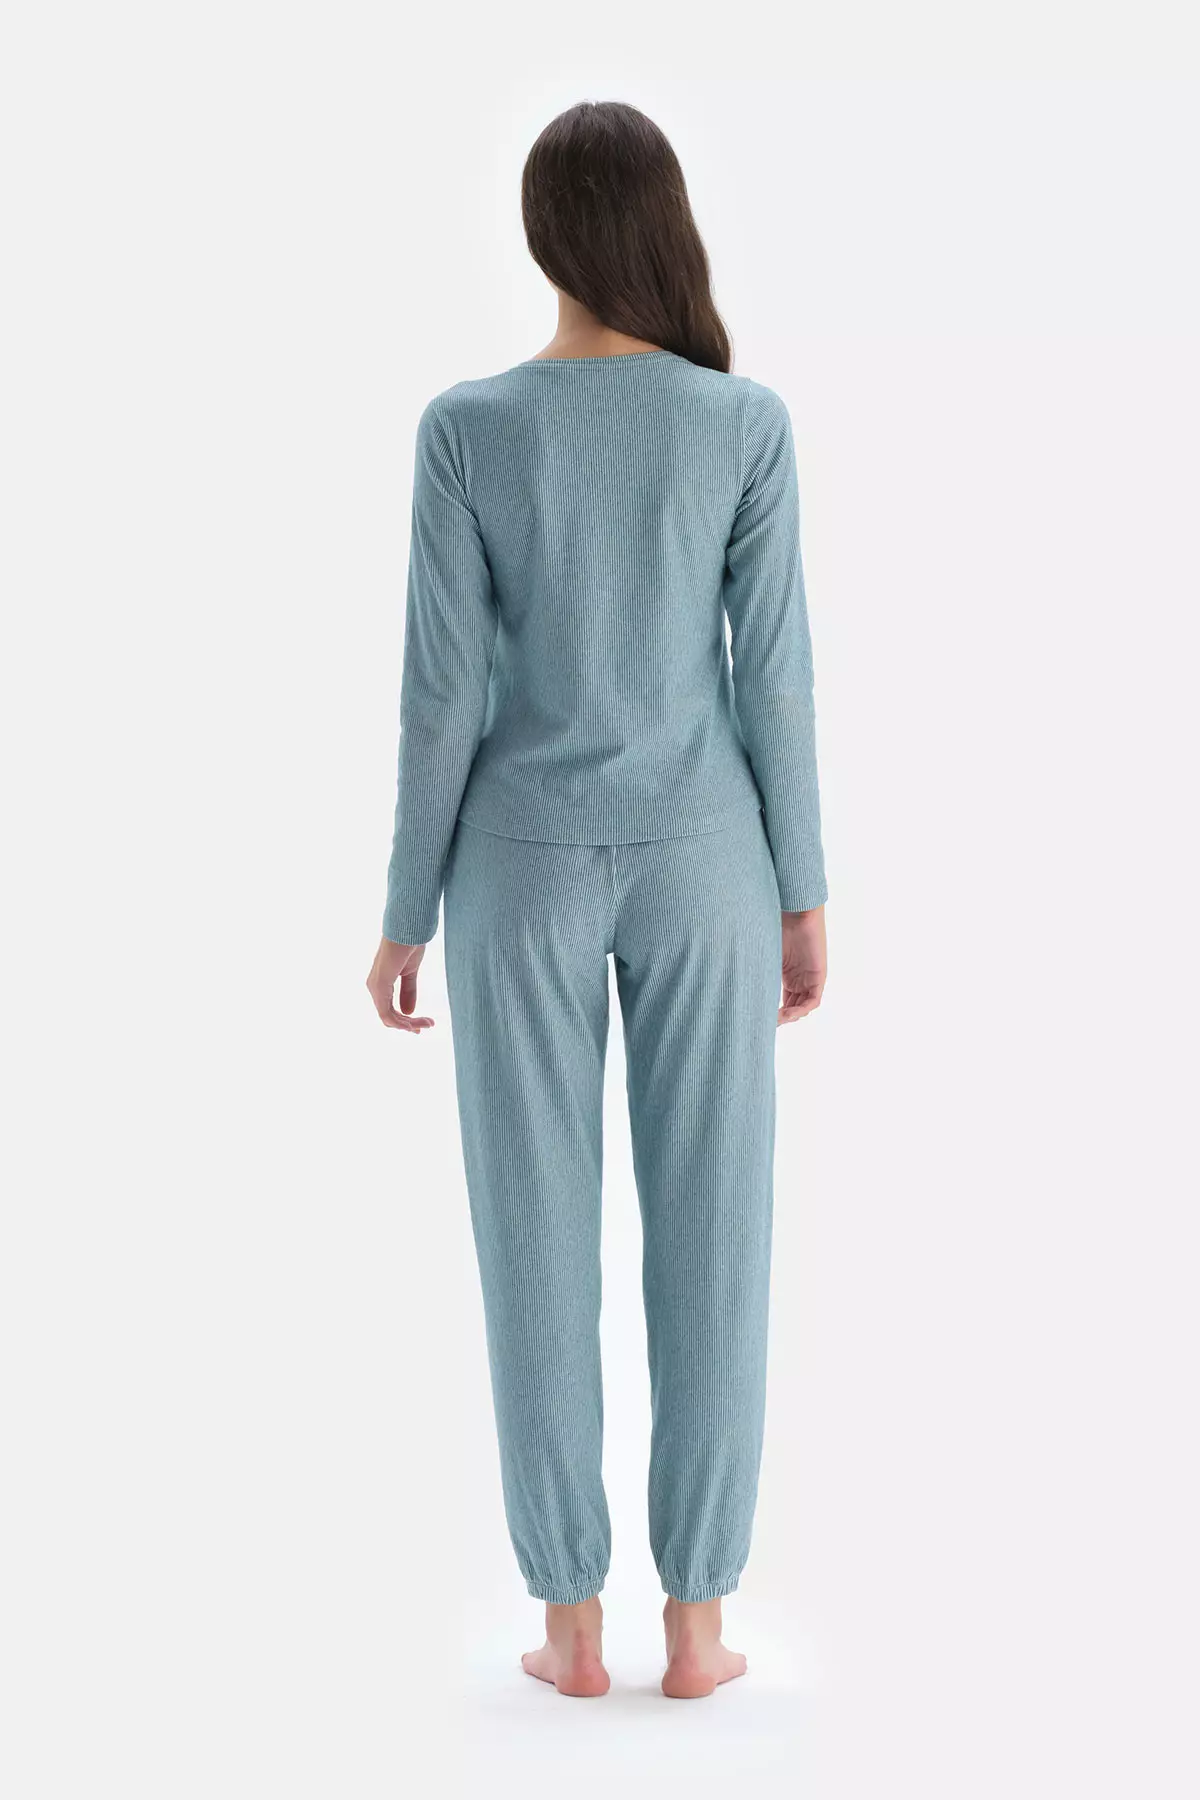 Felina Crew Neck Pajama Sets for Women